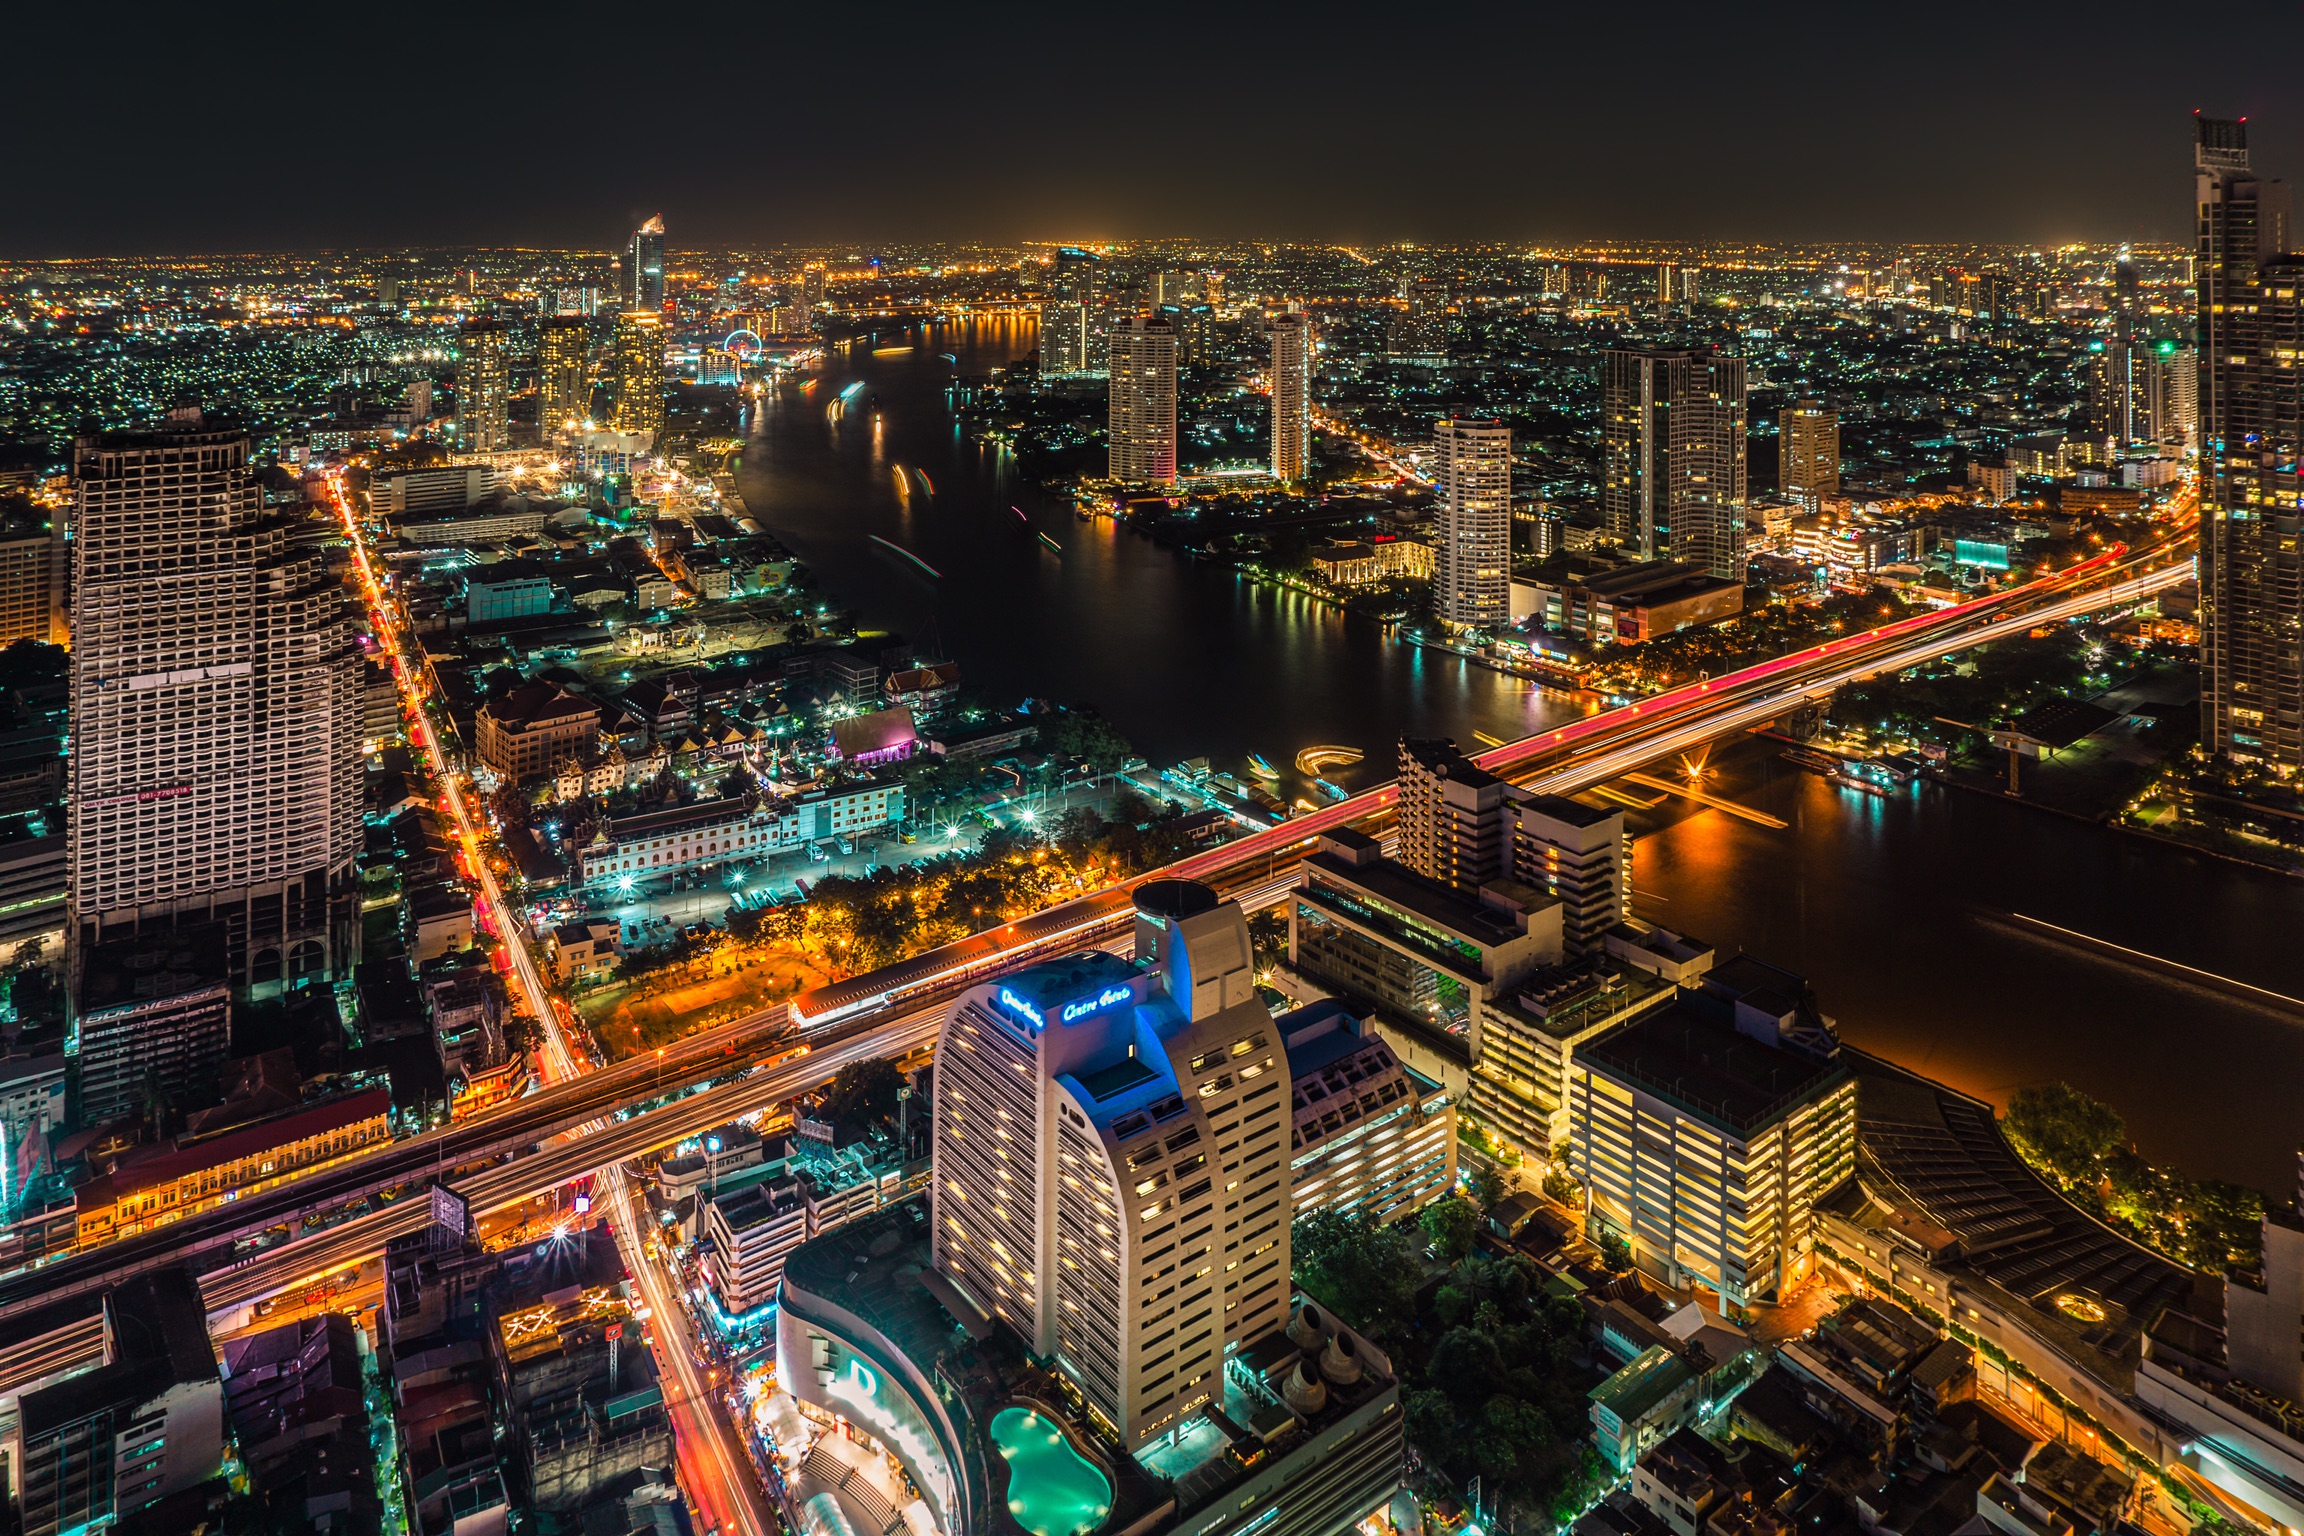 Bangkok by night...